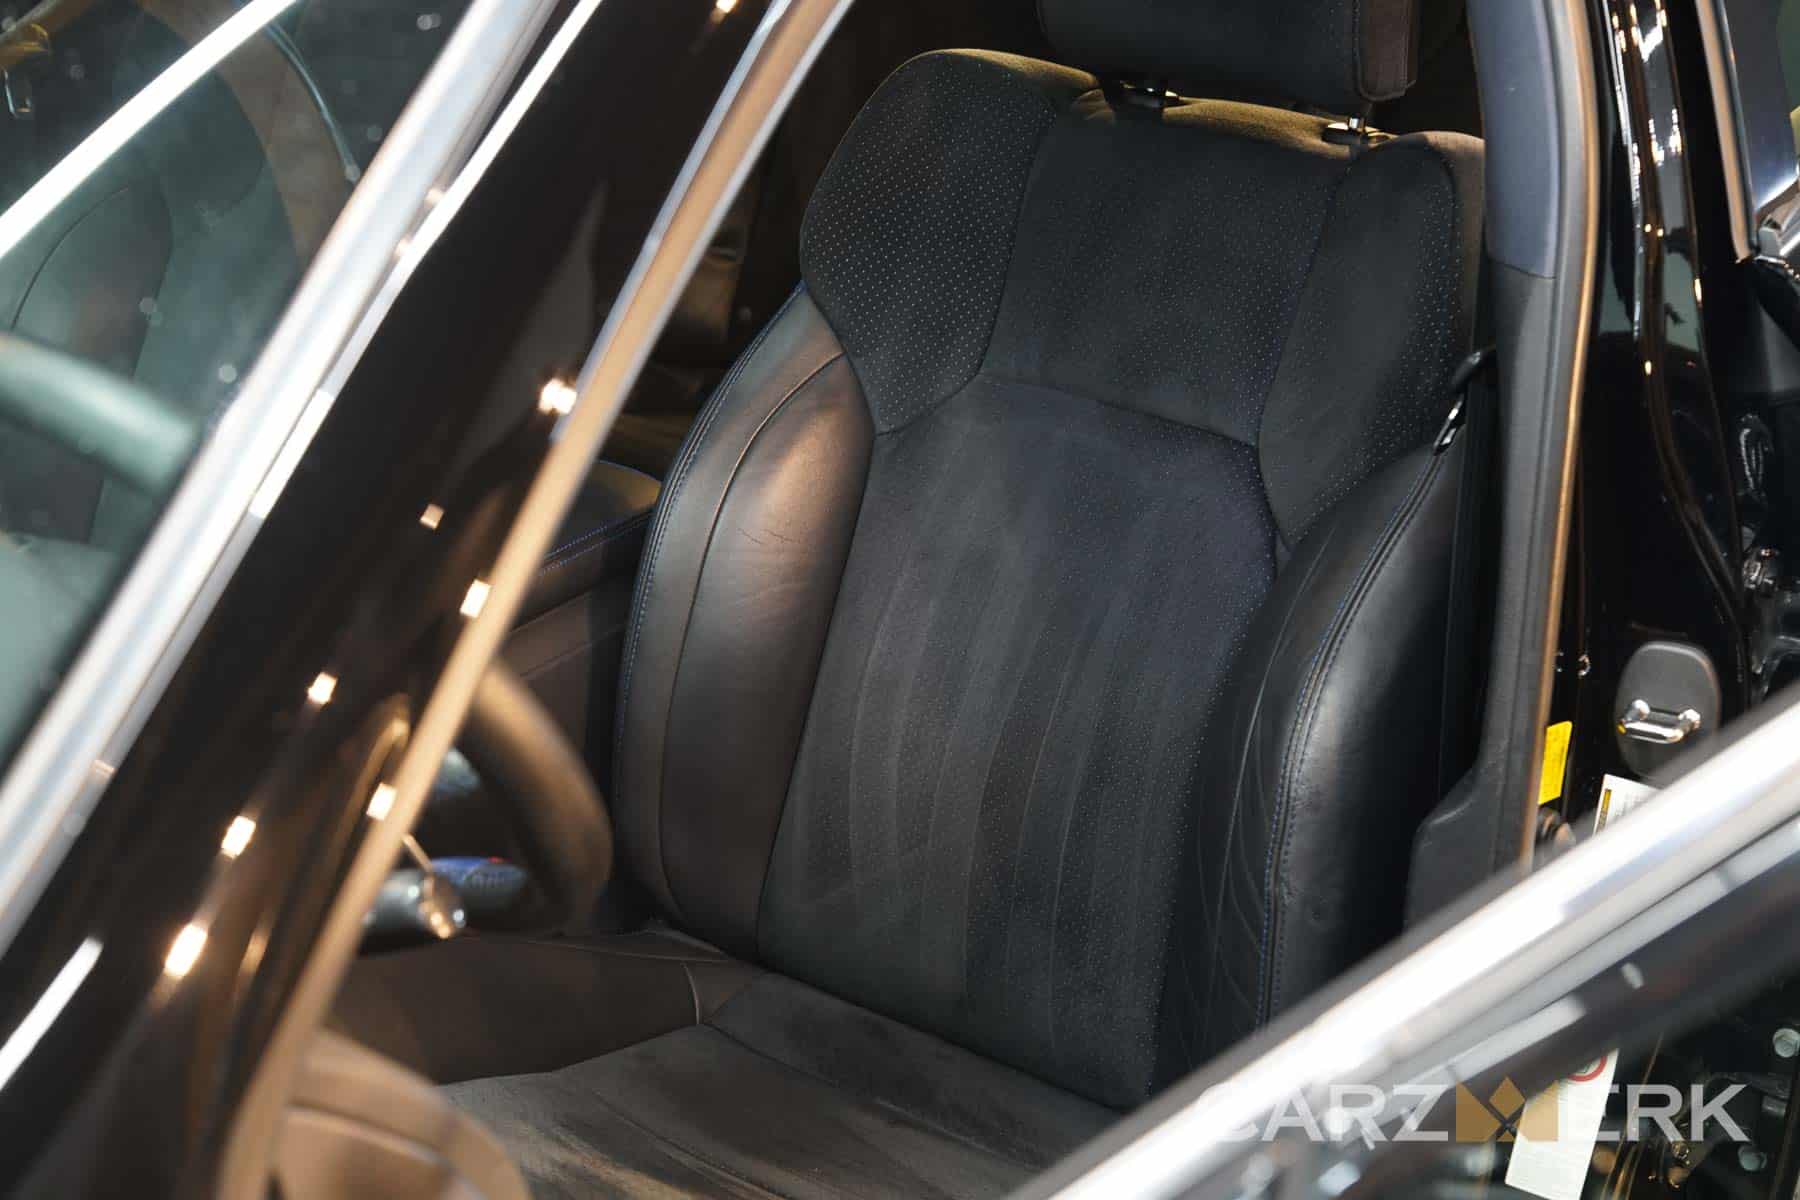 2013 Lexus ISF - Obsidian Black 212 - Seat